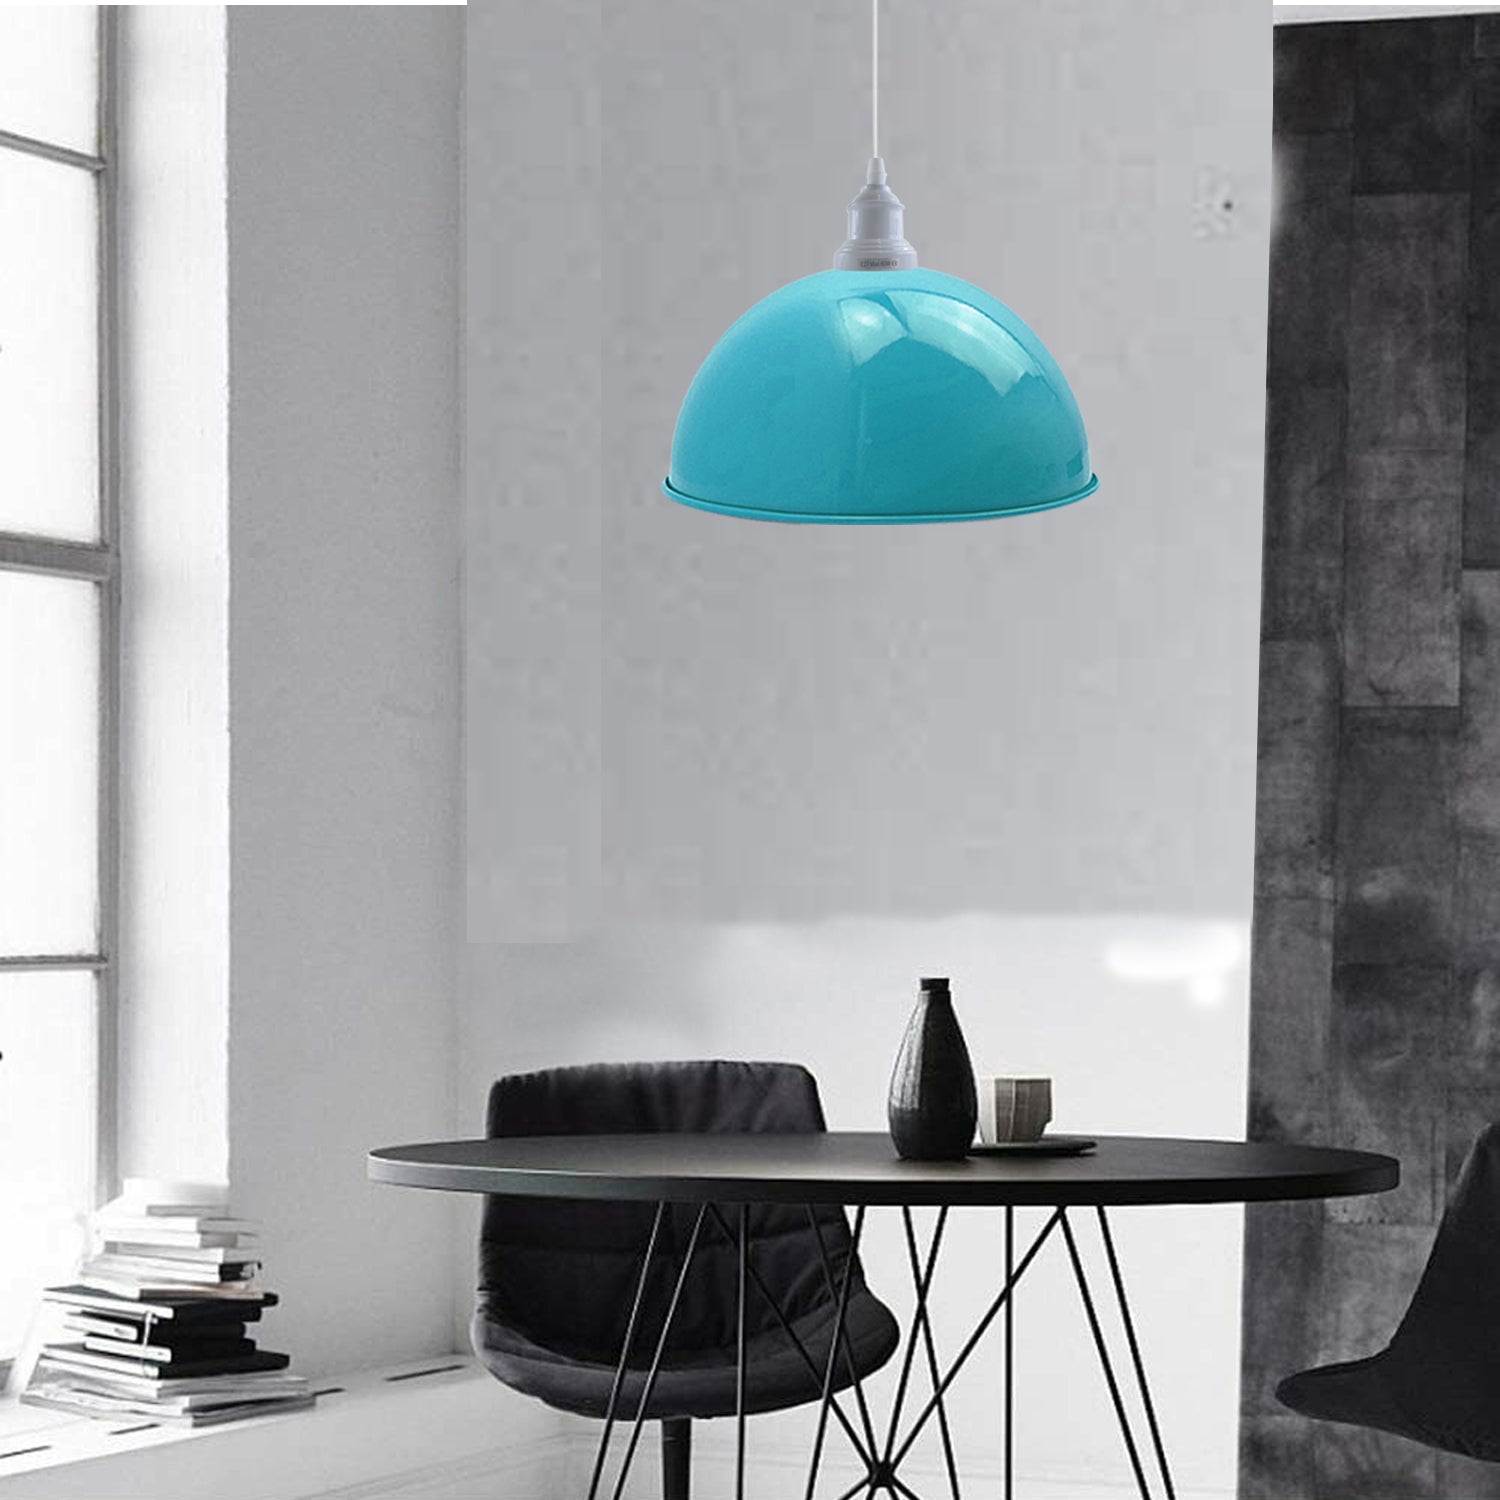 4 Pack Vintage Industrial Ceiling Light Blue Pendant Light Retro Loft Style Metal Shade Lamp~3570 - LEDSone UK Ltd